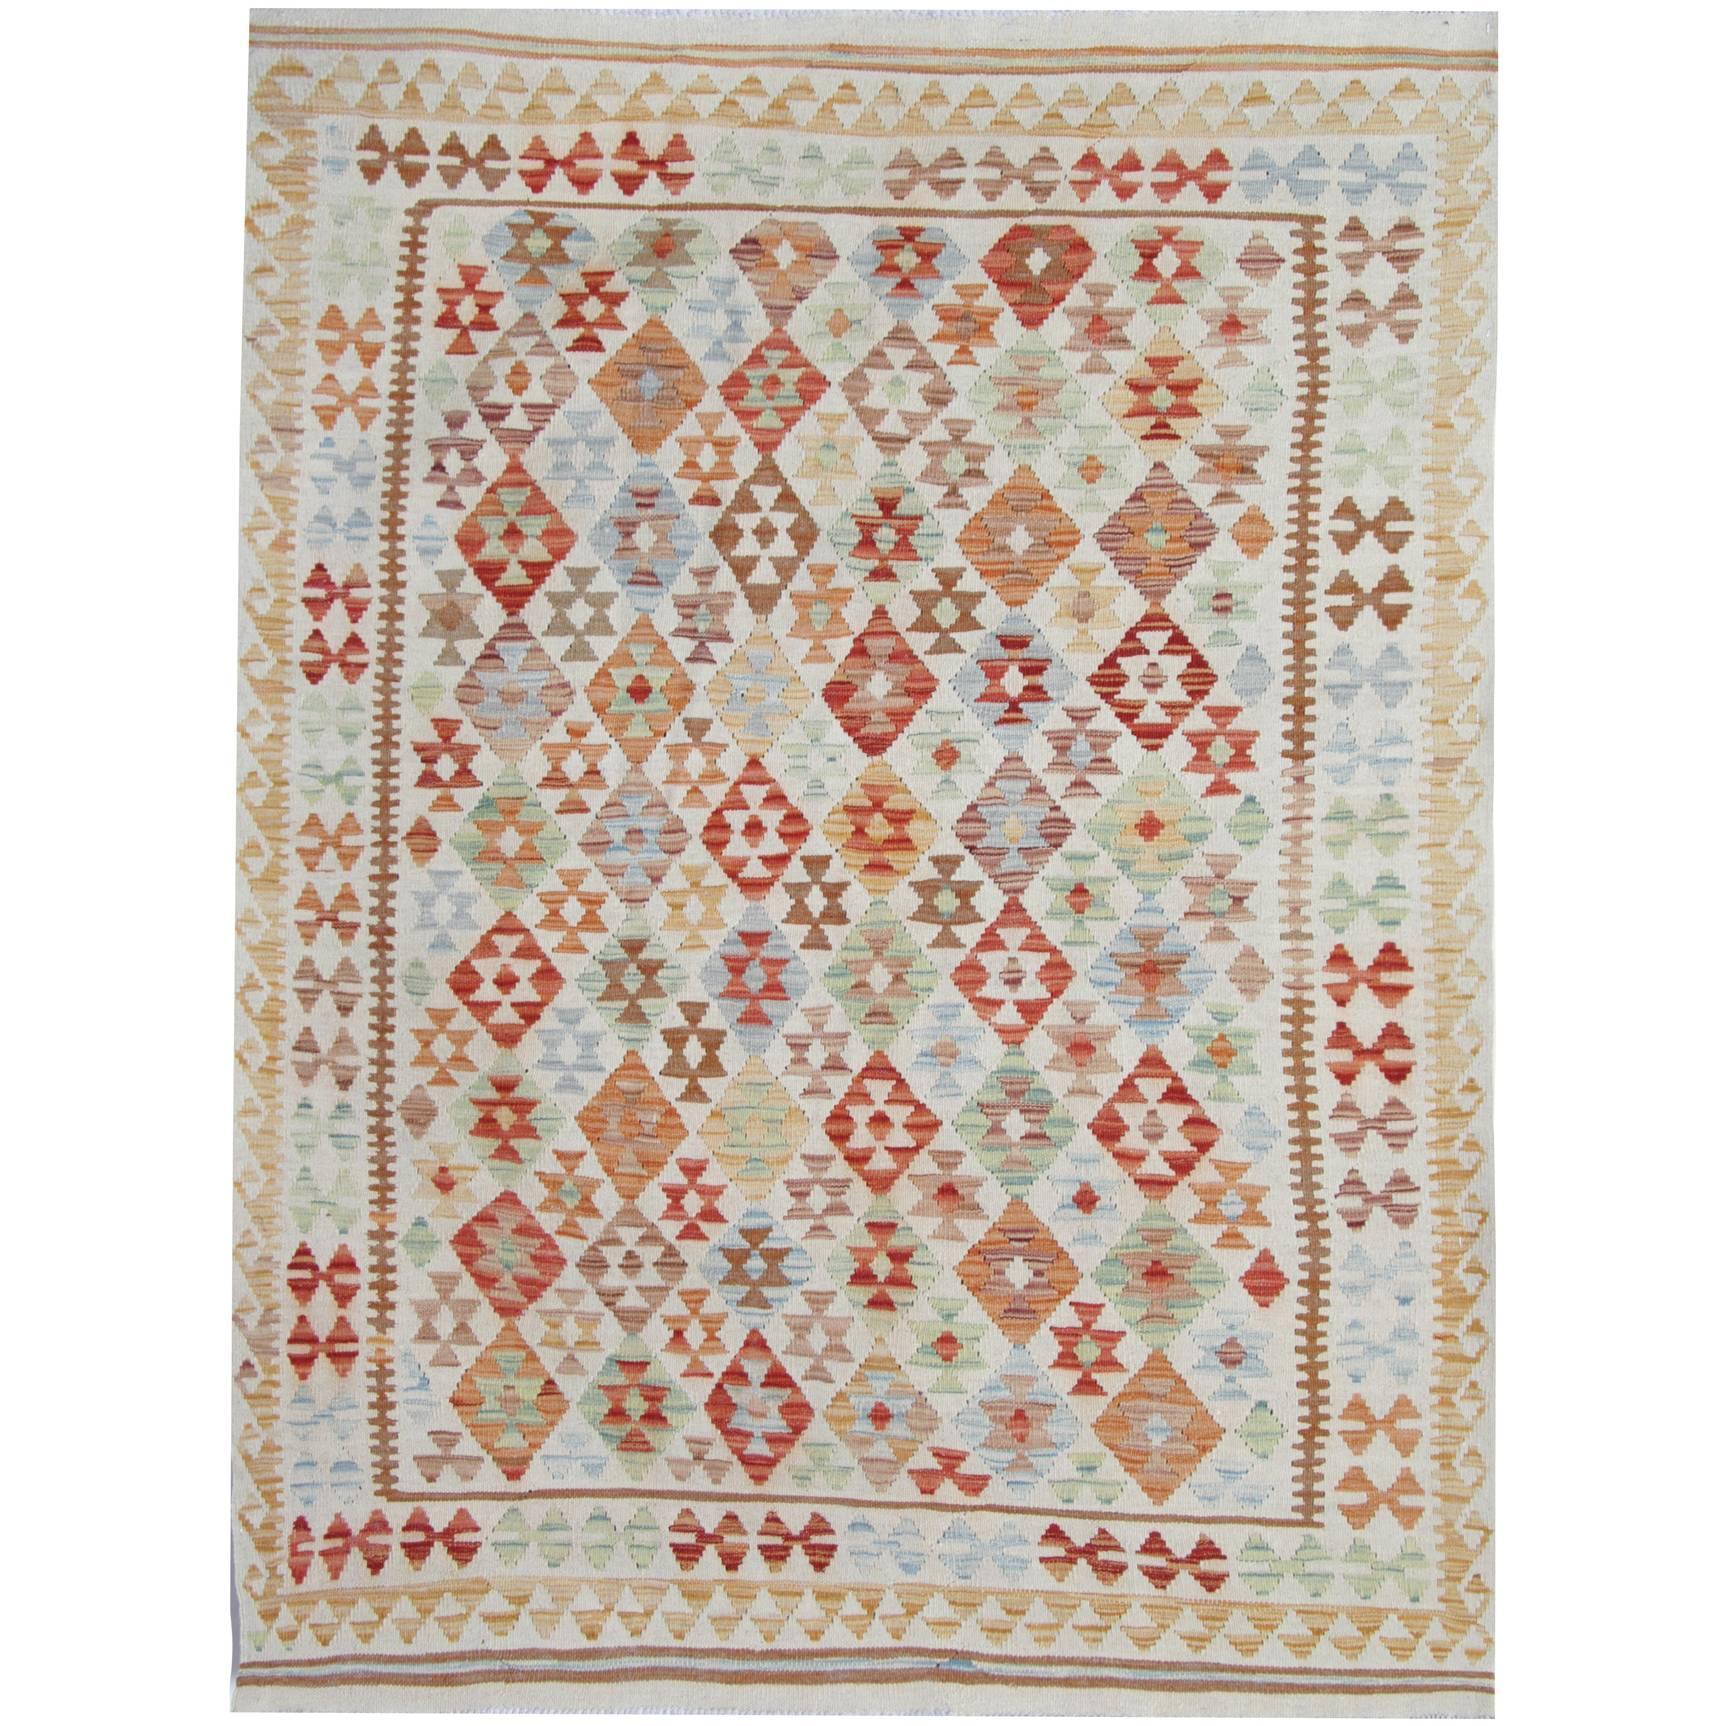 Traditional Rugs Design, Afghan Kilim Rugs